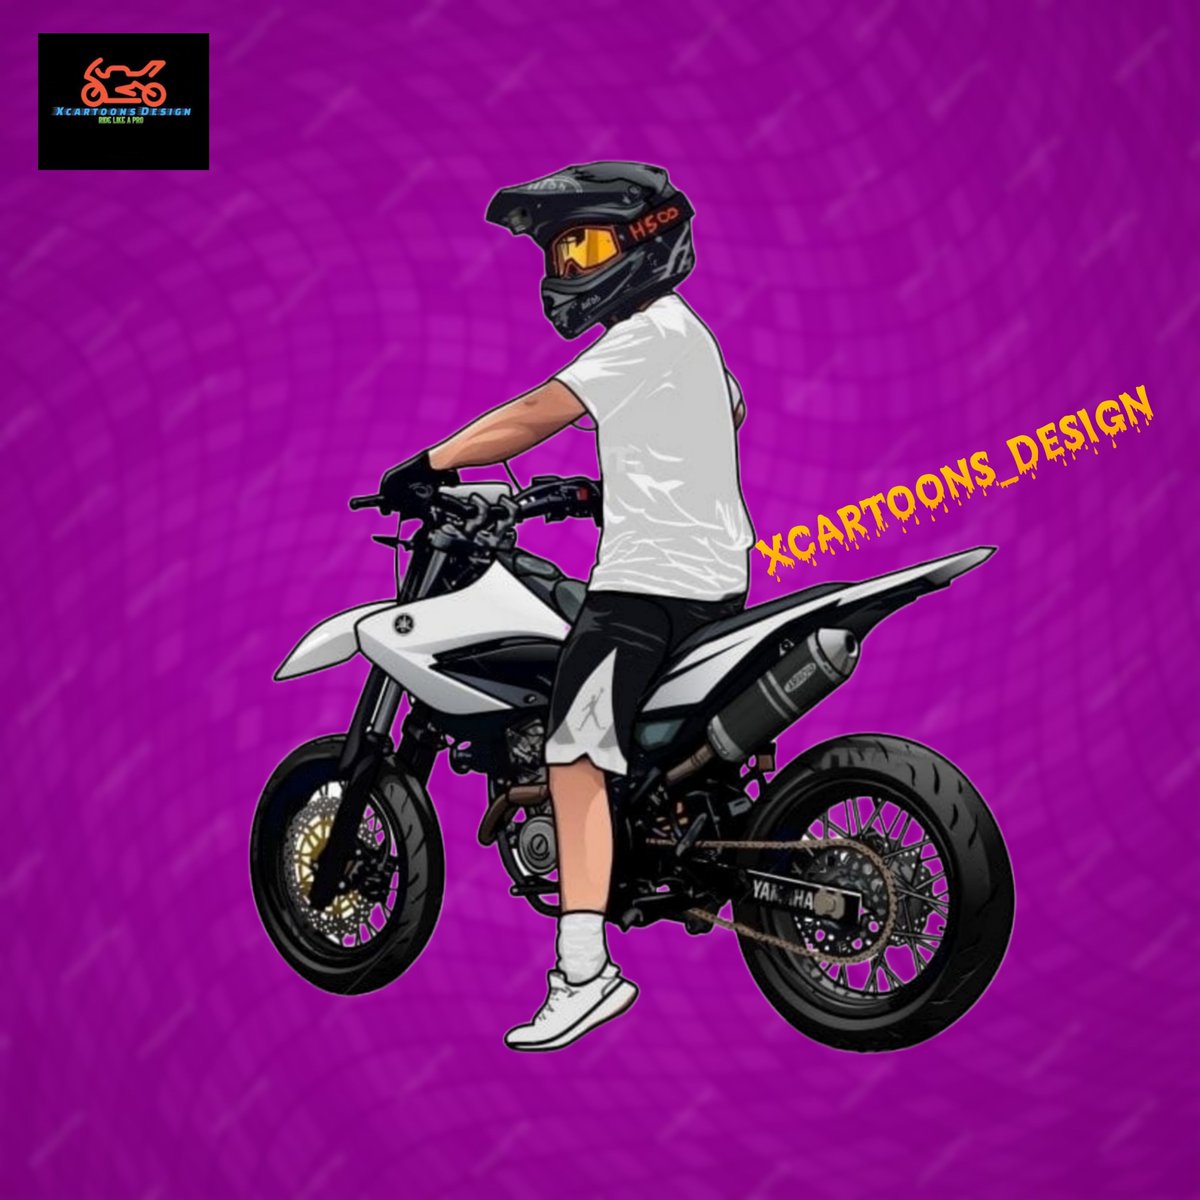 Cartoons that speak the language of biker's
#racing #duke #ninja #motorsport #bikes #instamotogallery #ride #mt #motorcycles #rider #bikelife #sportbikelife #bikerlife #motorrad #Canada #Florida #panigale #motolife #supermoto #Germany #bikestagram #Kerala #motorcycles